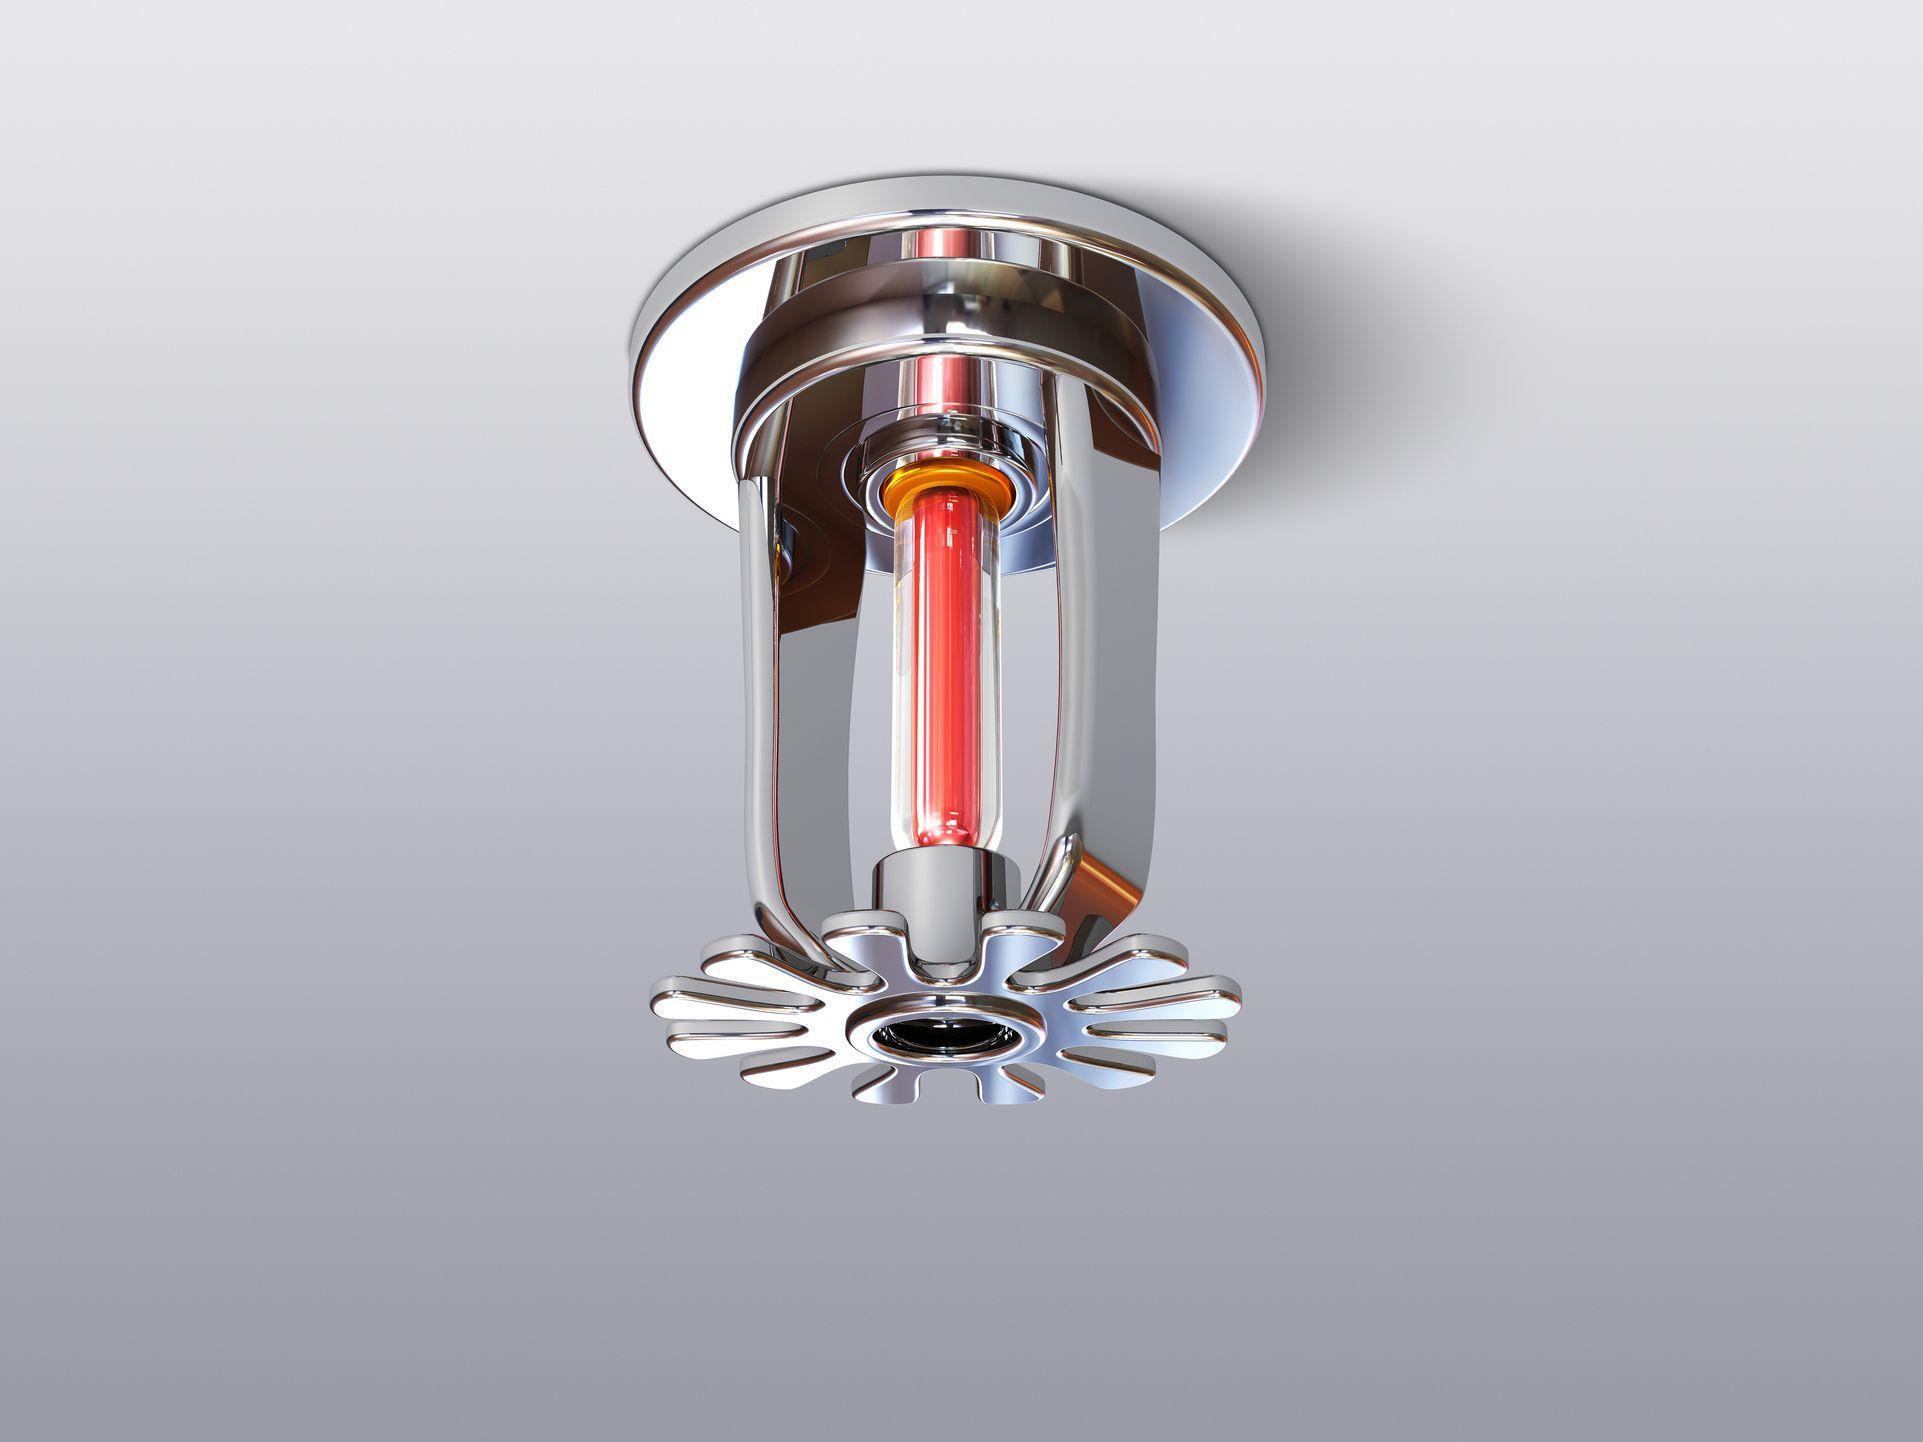 Sprinkler System Basics: Types of Sprinkler Systems